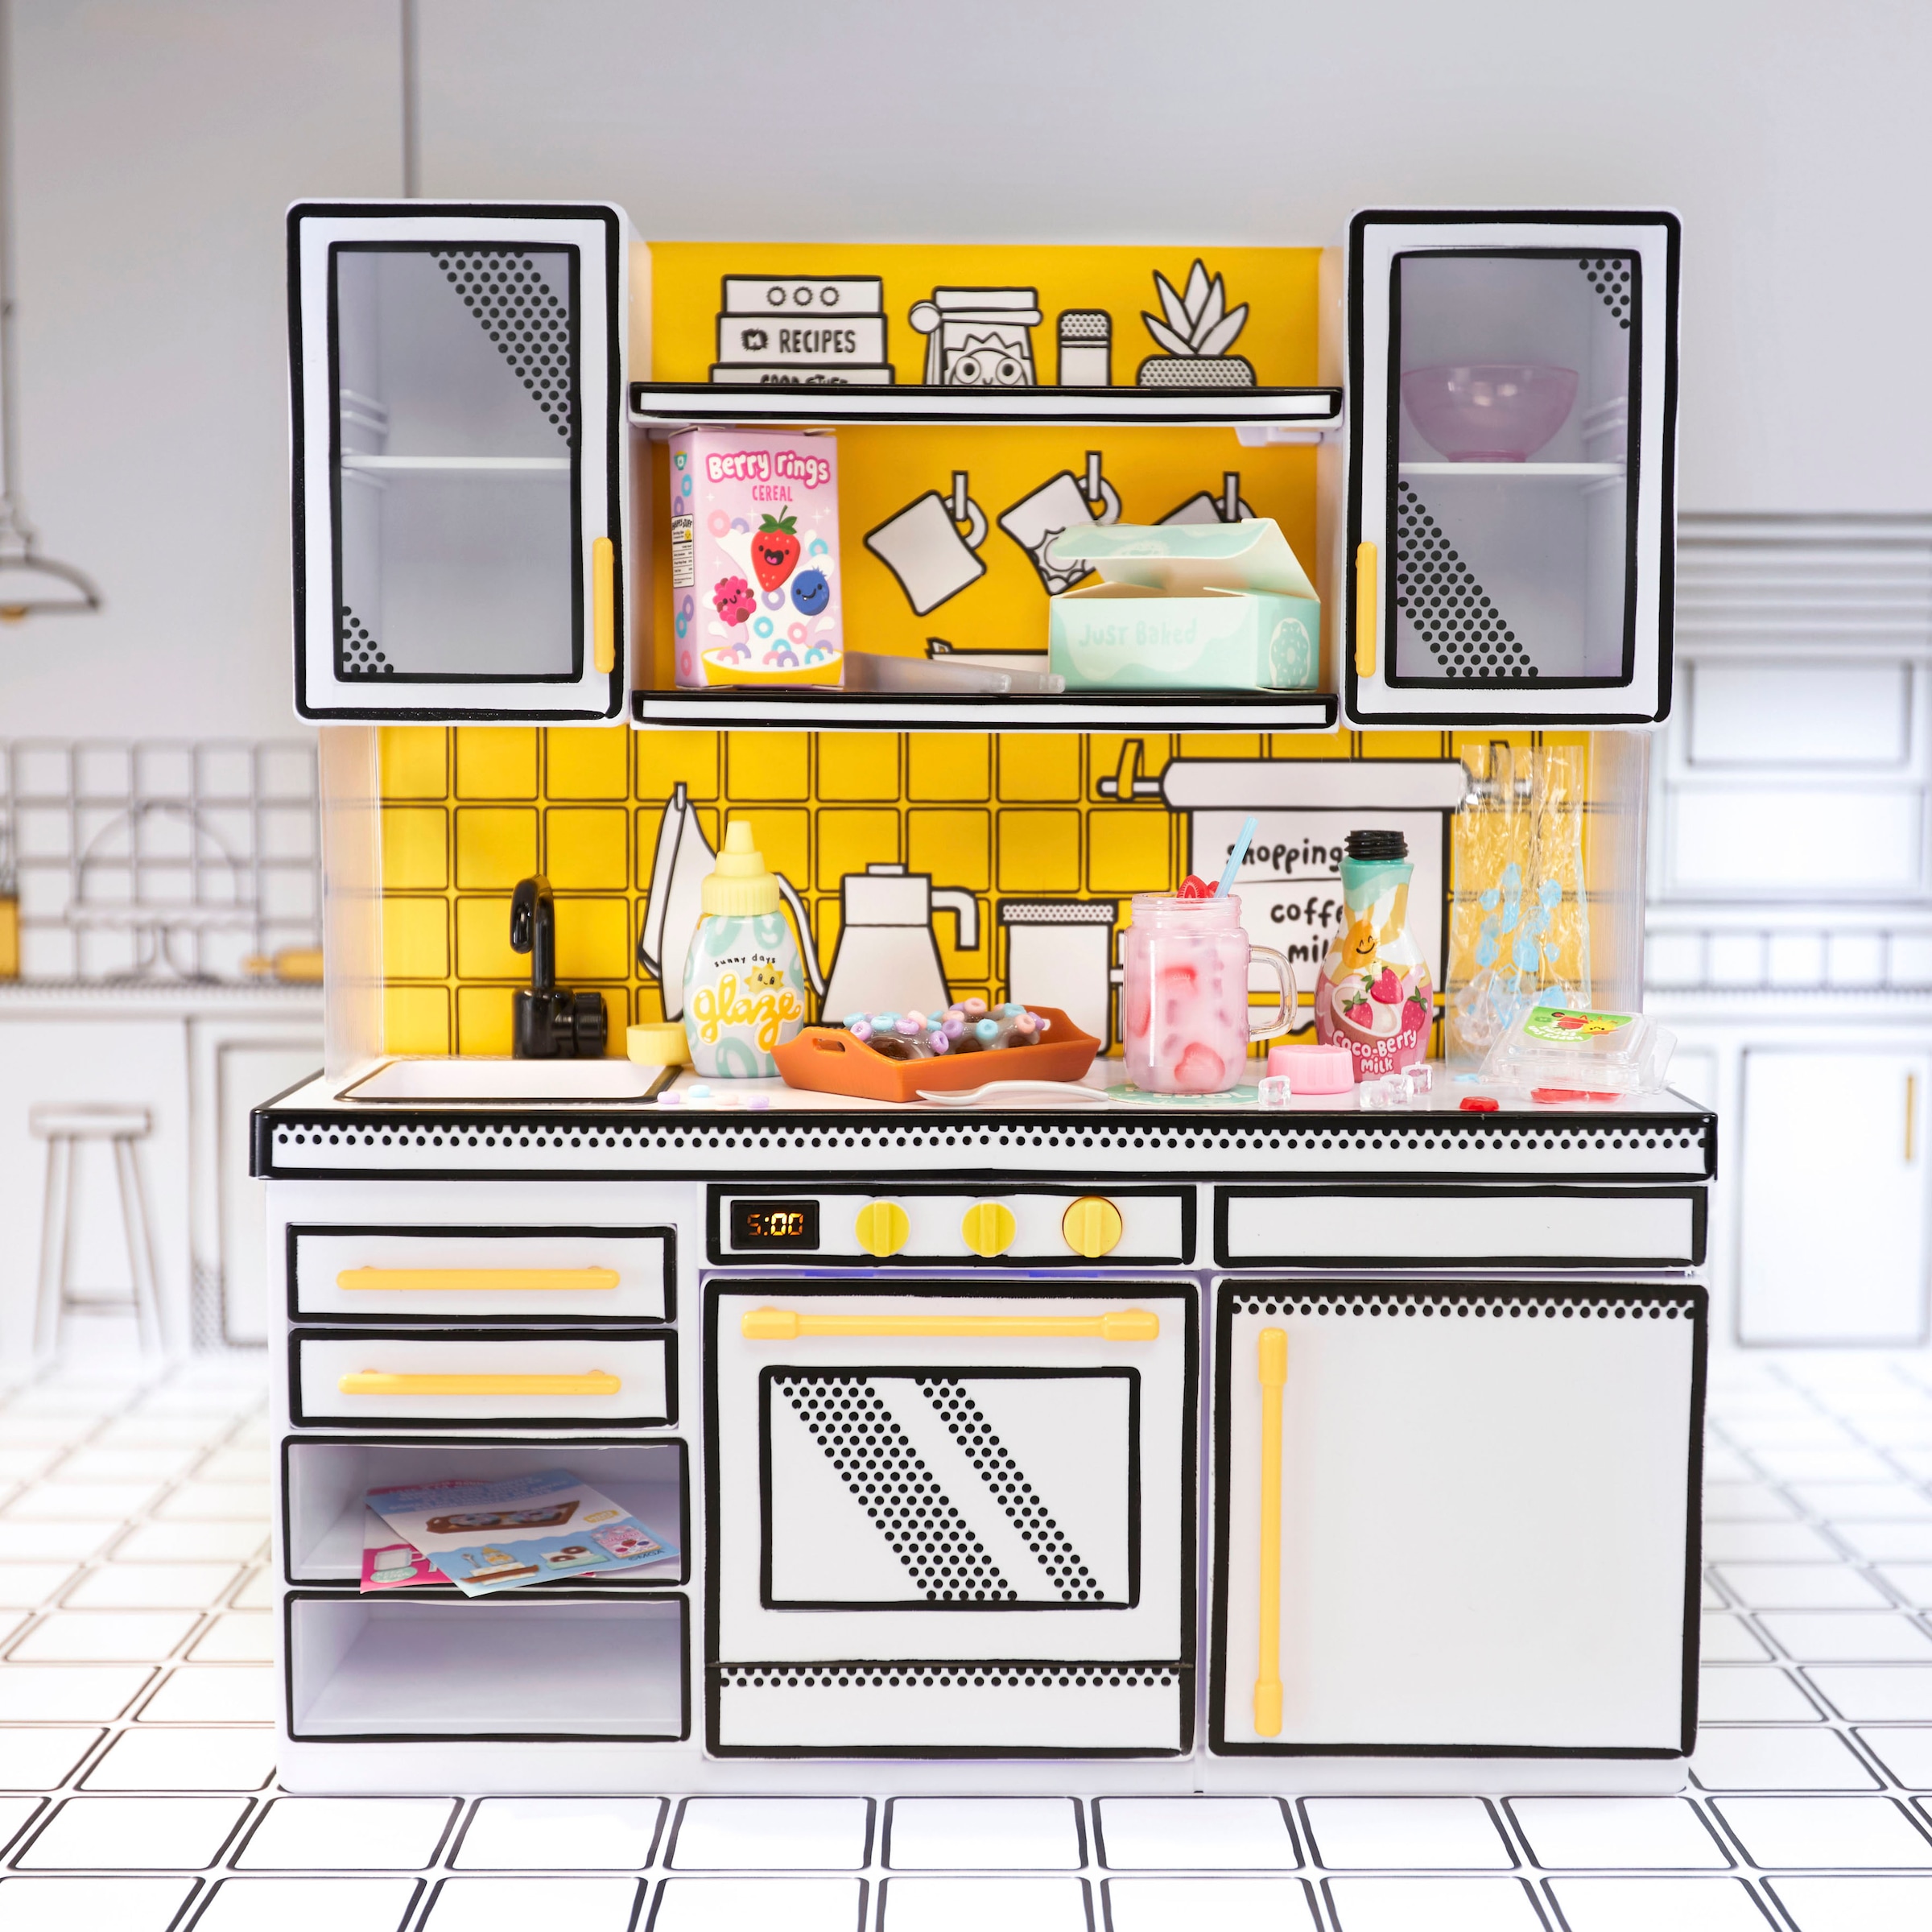 The Miniverse Make It Mini Kitchen by MGA Entertainment